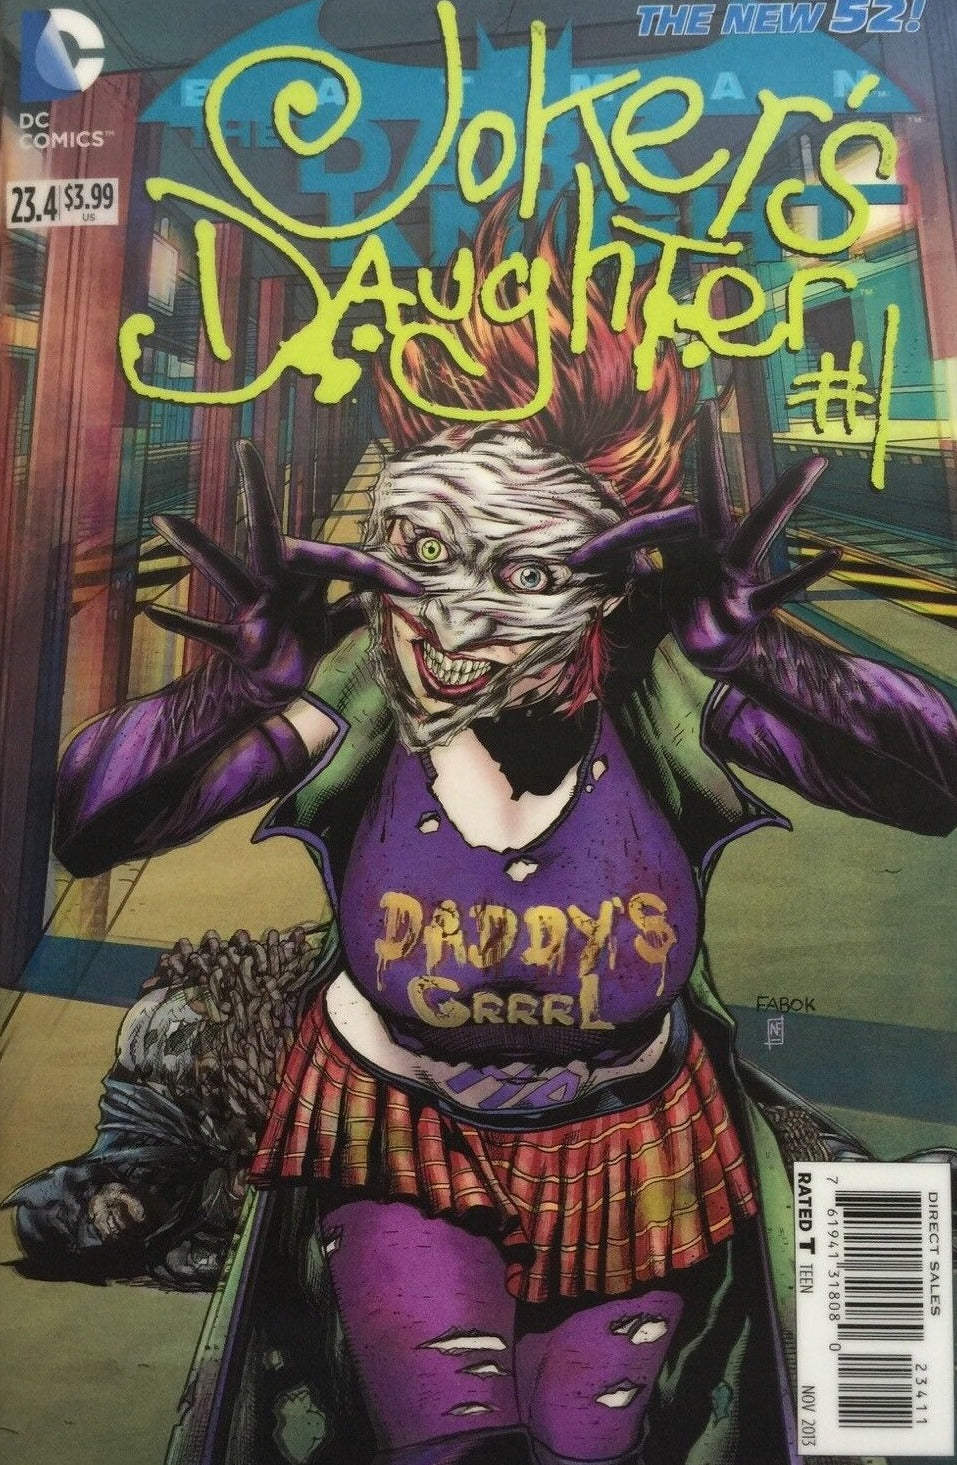 JOKER'S DAUGHTER # 1 BATMAN THE DARK KNIGHT # 23.4 DC COMICS 3D LENTICULAR COVER VARIANT COMIC BOOK 2013